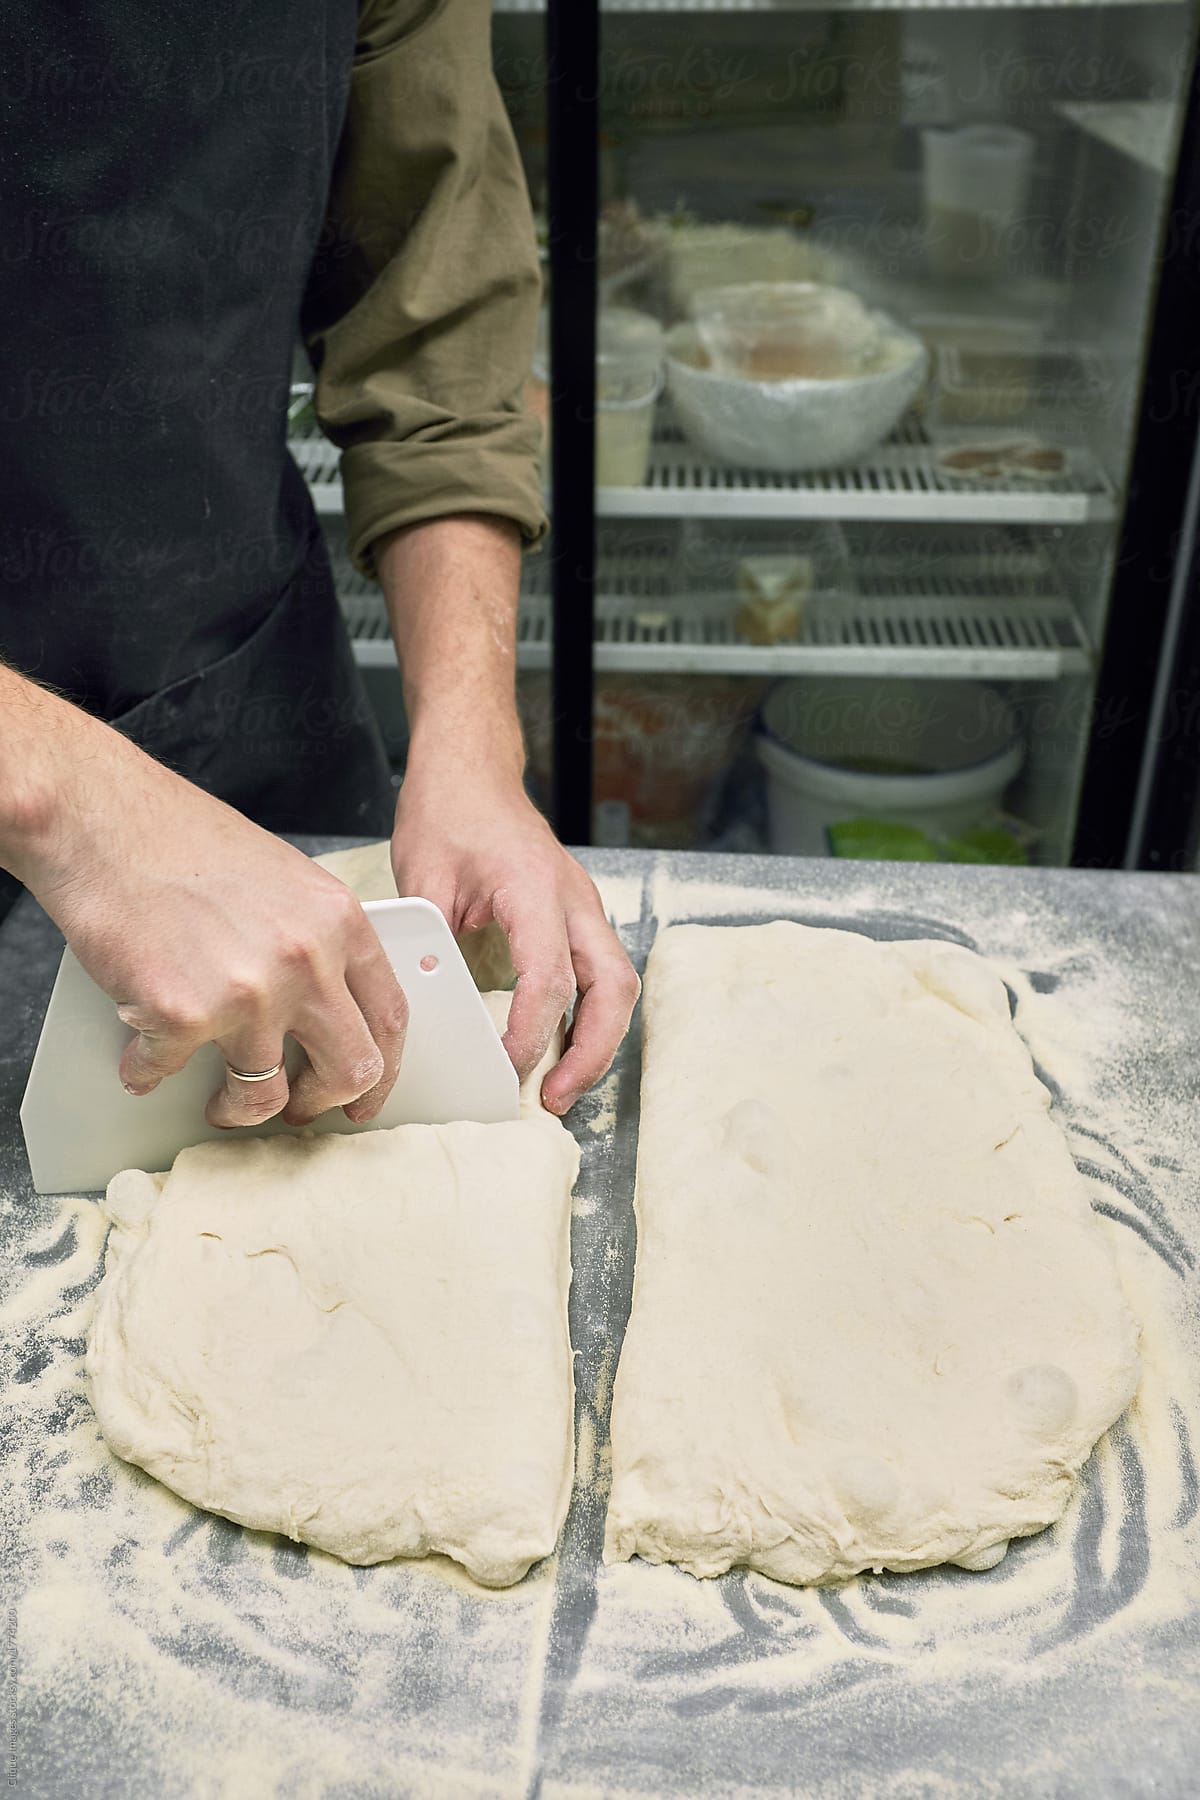 Baker cutting ciabatta dough